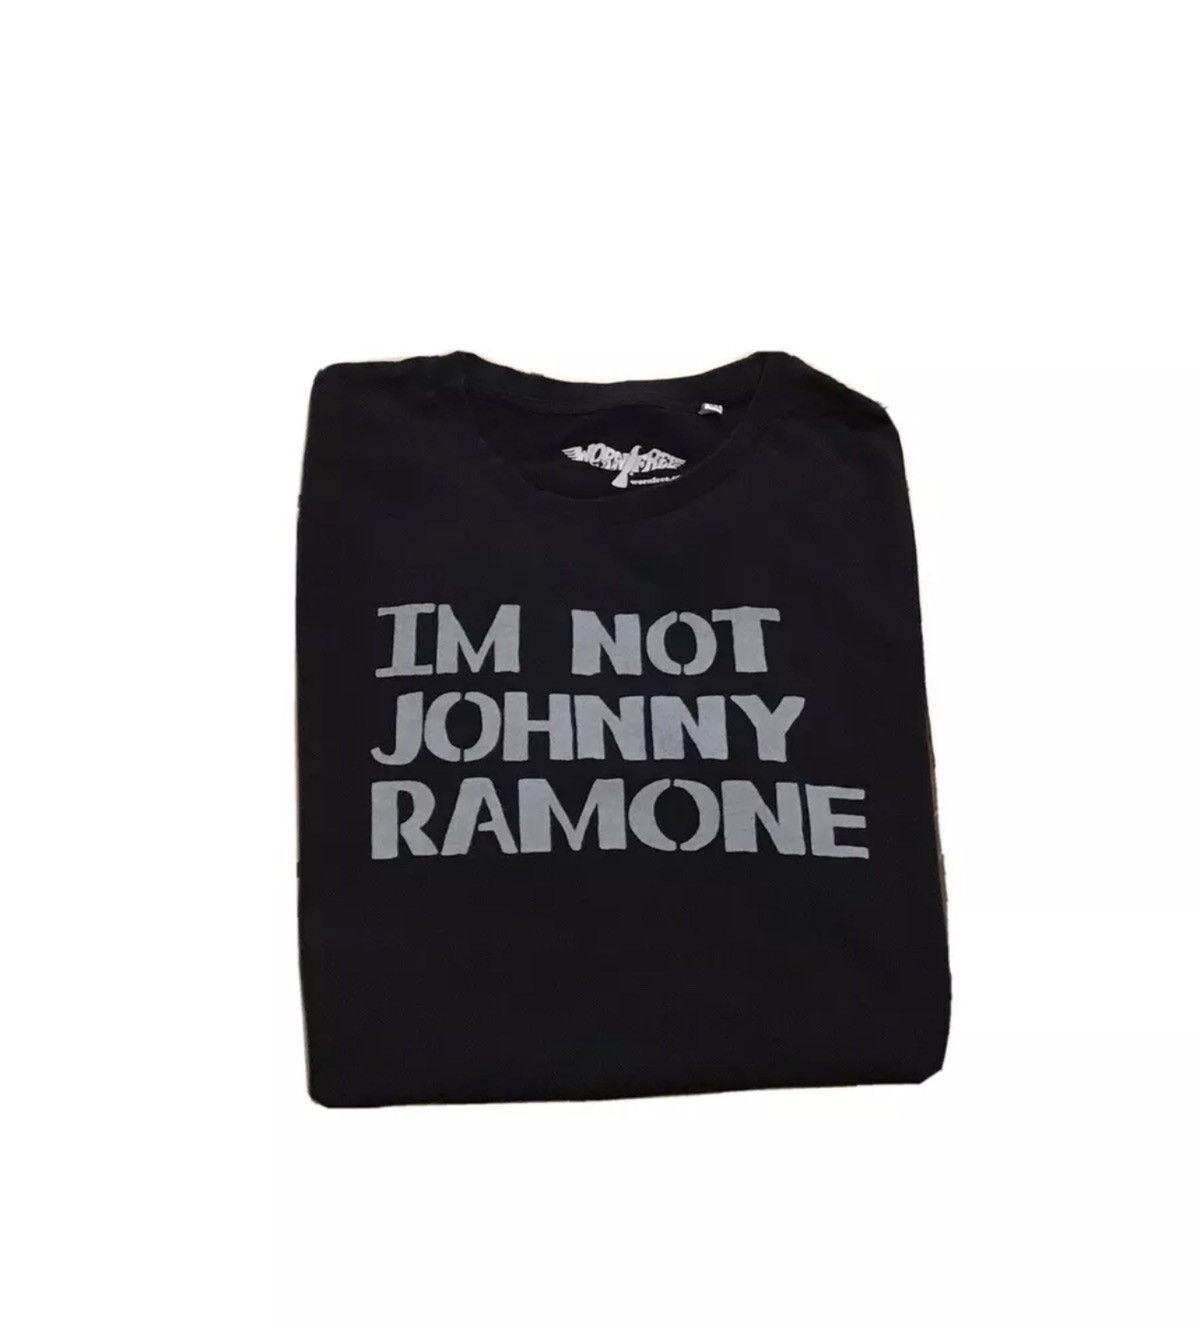 Band Tees Worn Free Im Not Johnny Ramone The Ramones Punk Rock T-shirt Size US XXL / EU 58 / 5 - 1 Preview